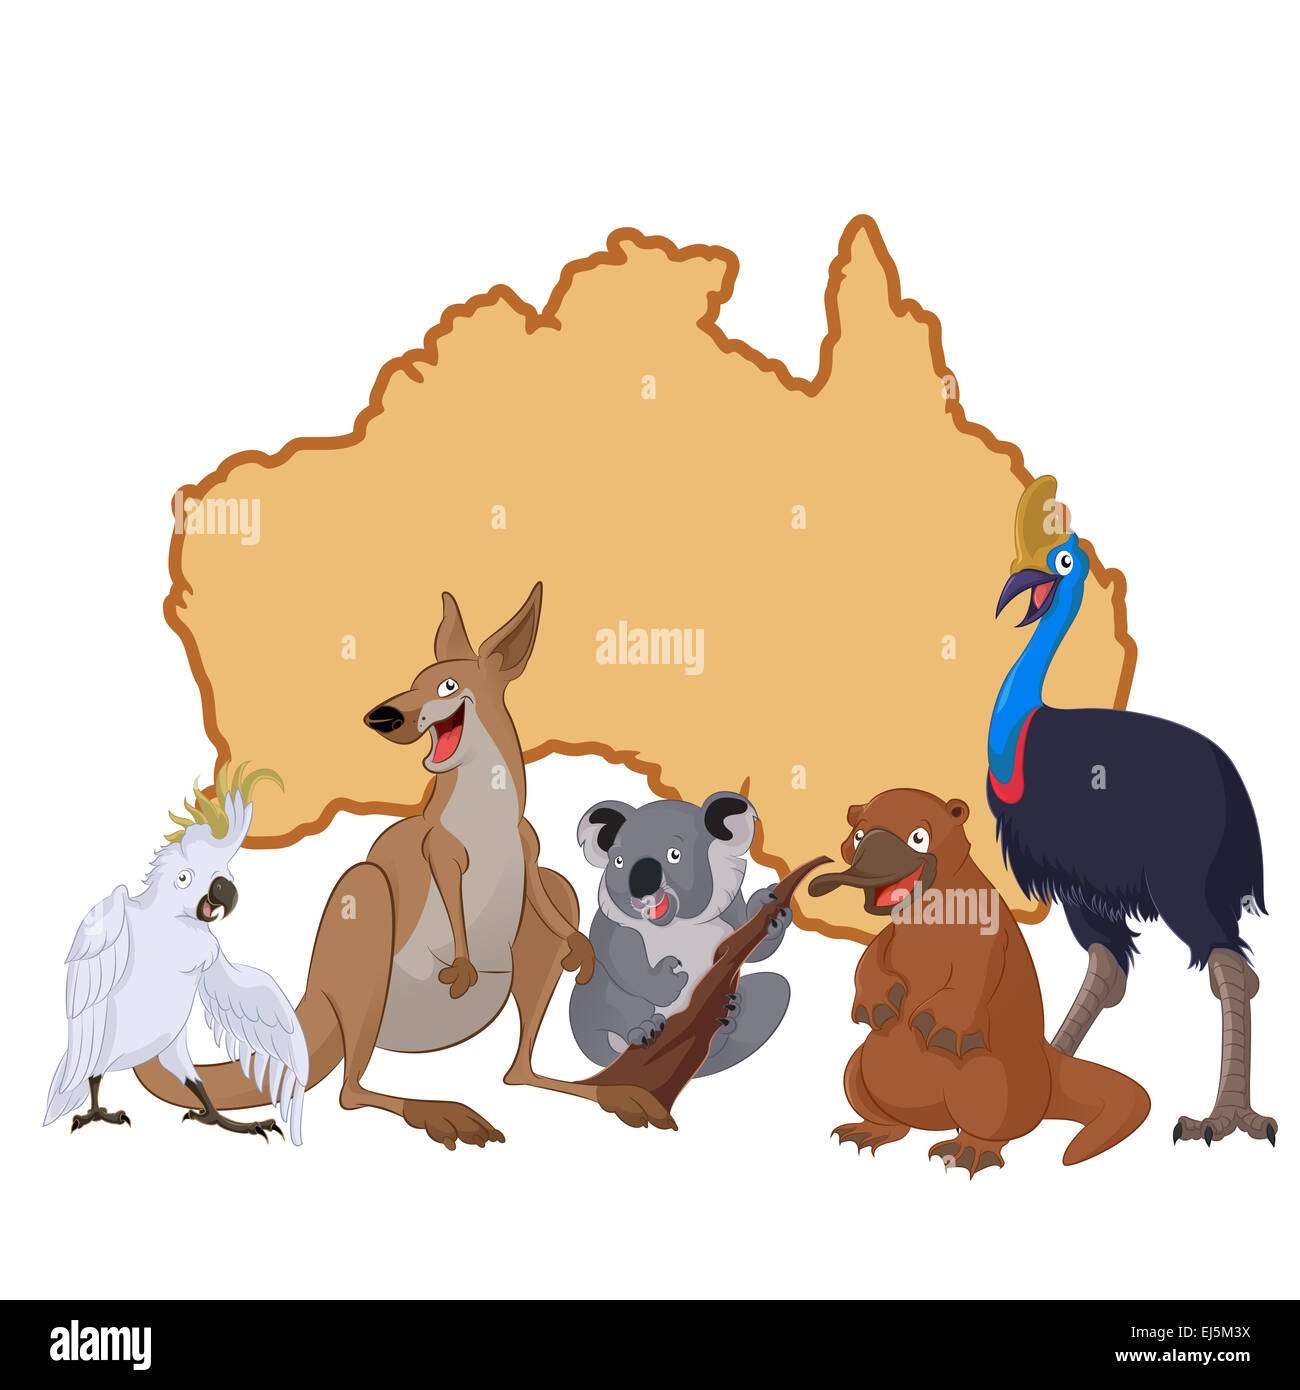 Vector image of Australia with cartoon animals Stock Photo